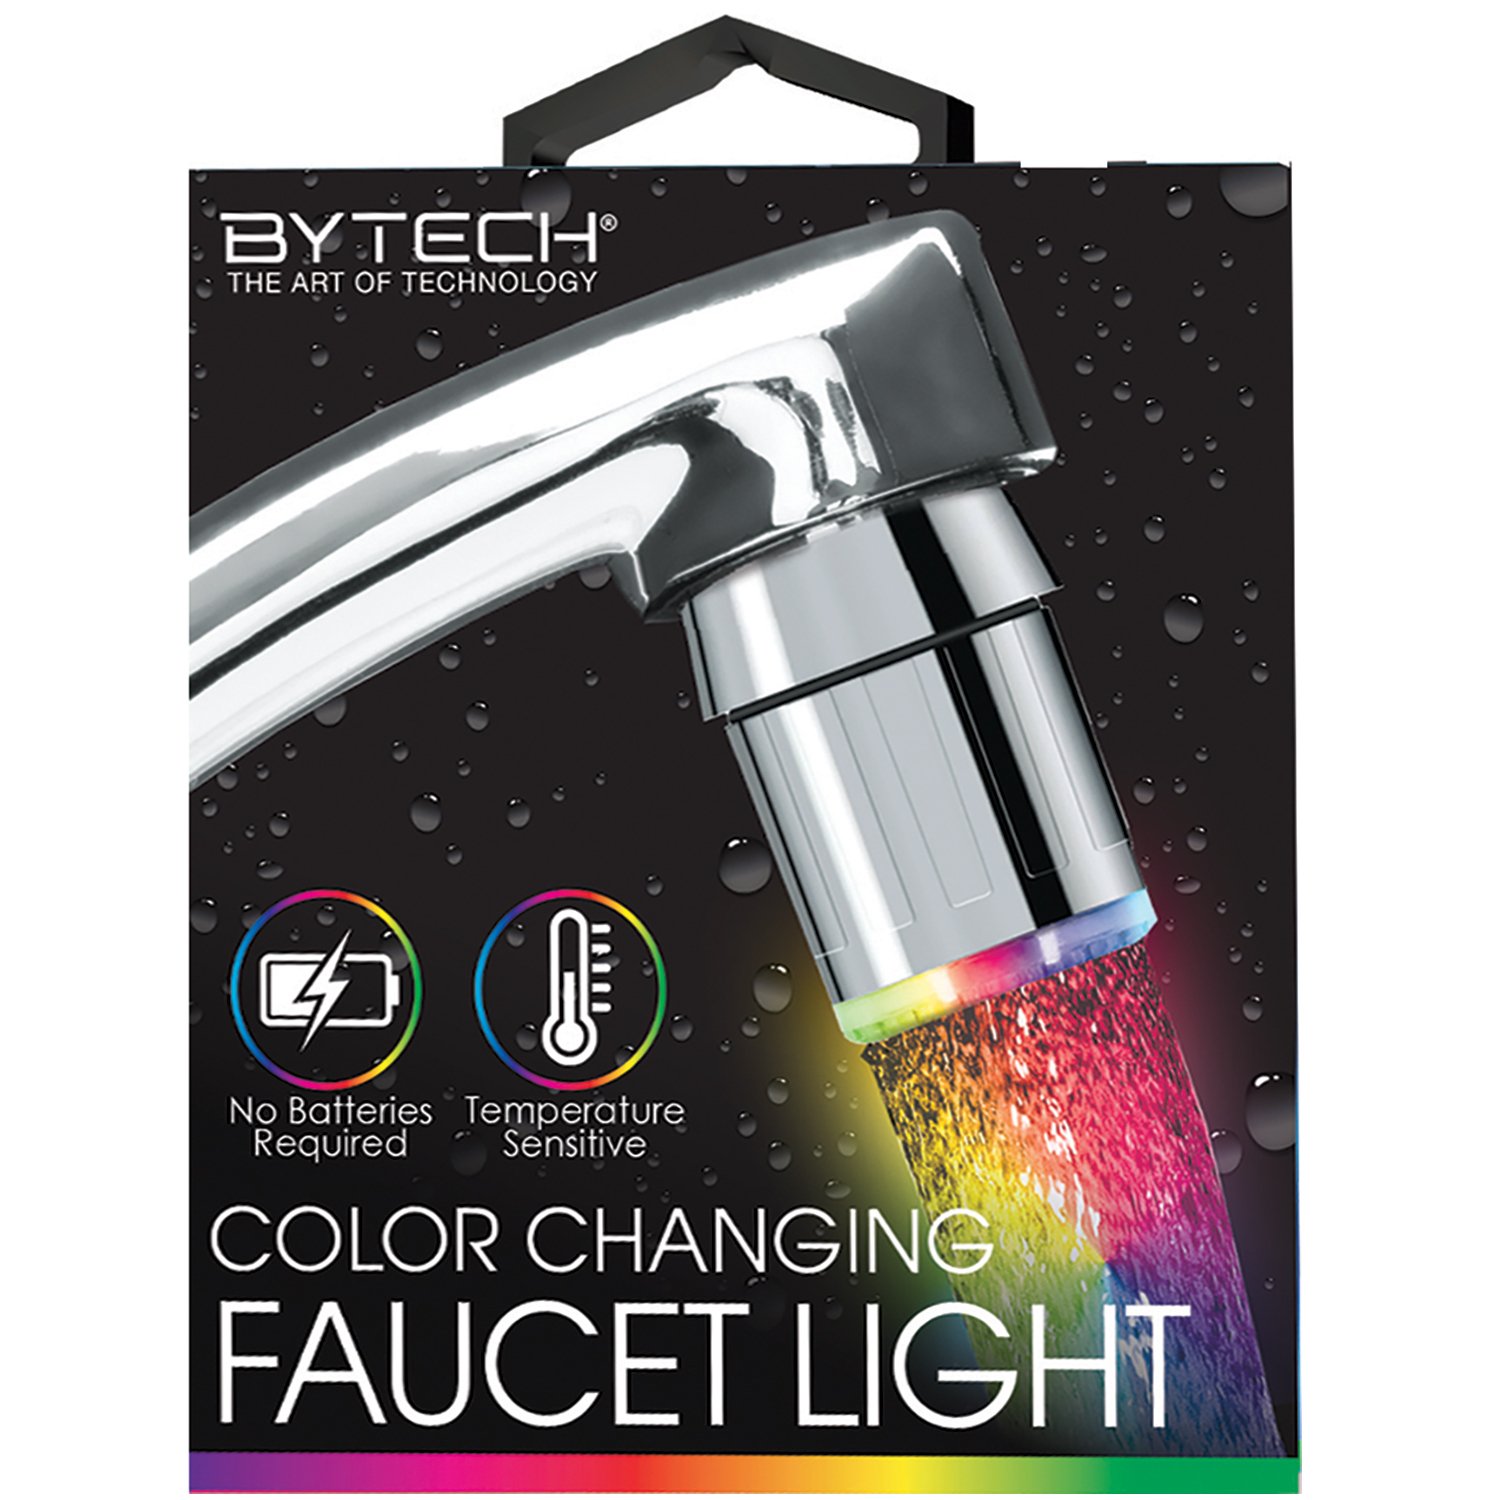 Bytech - Color changing faucet light